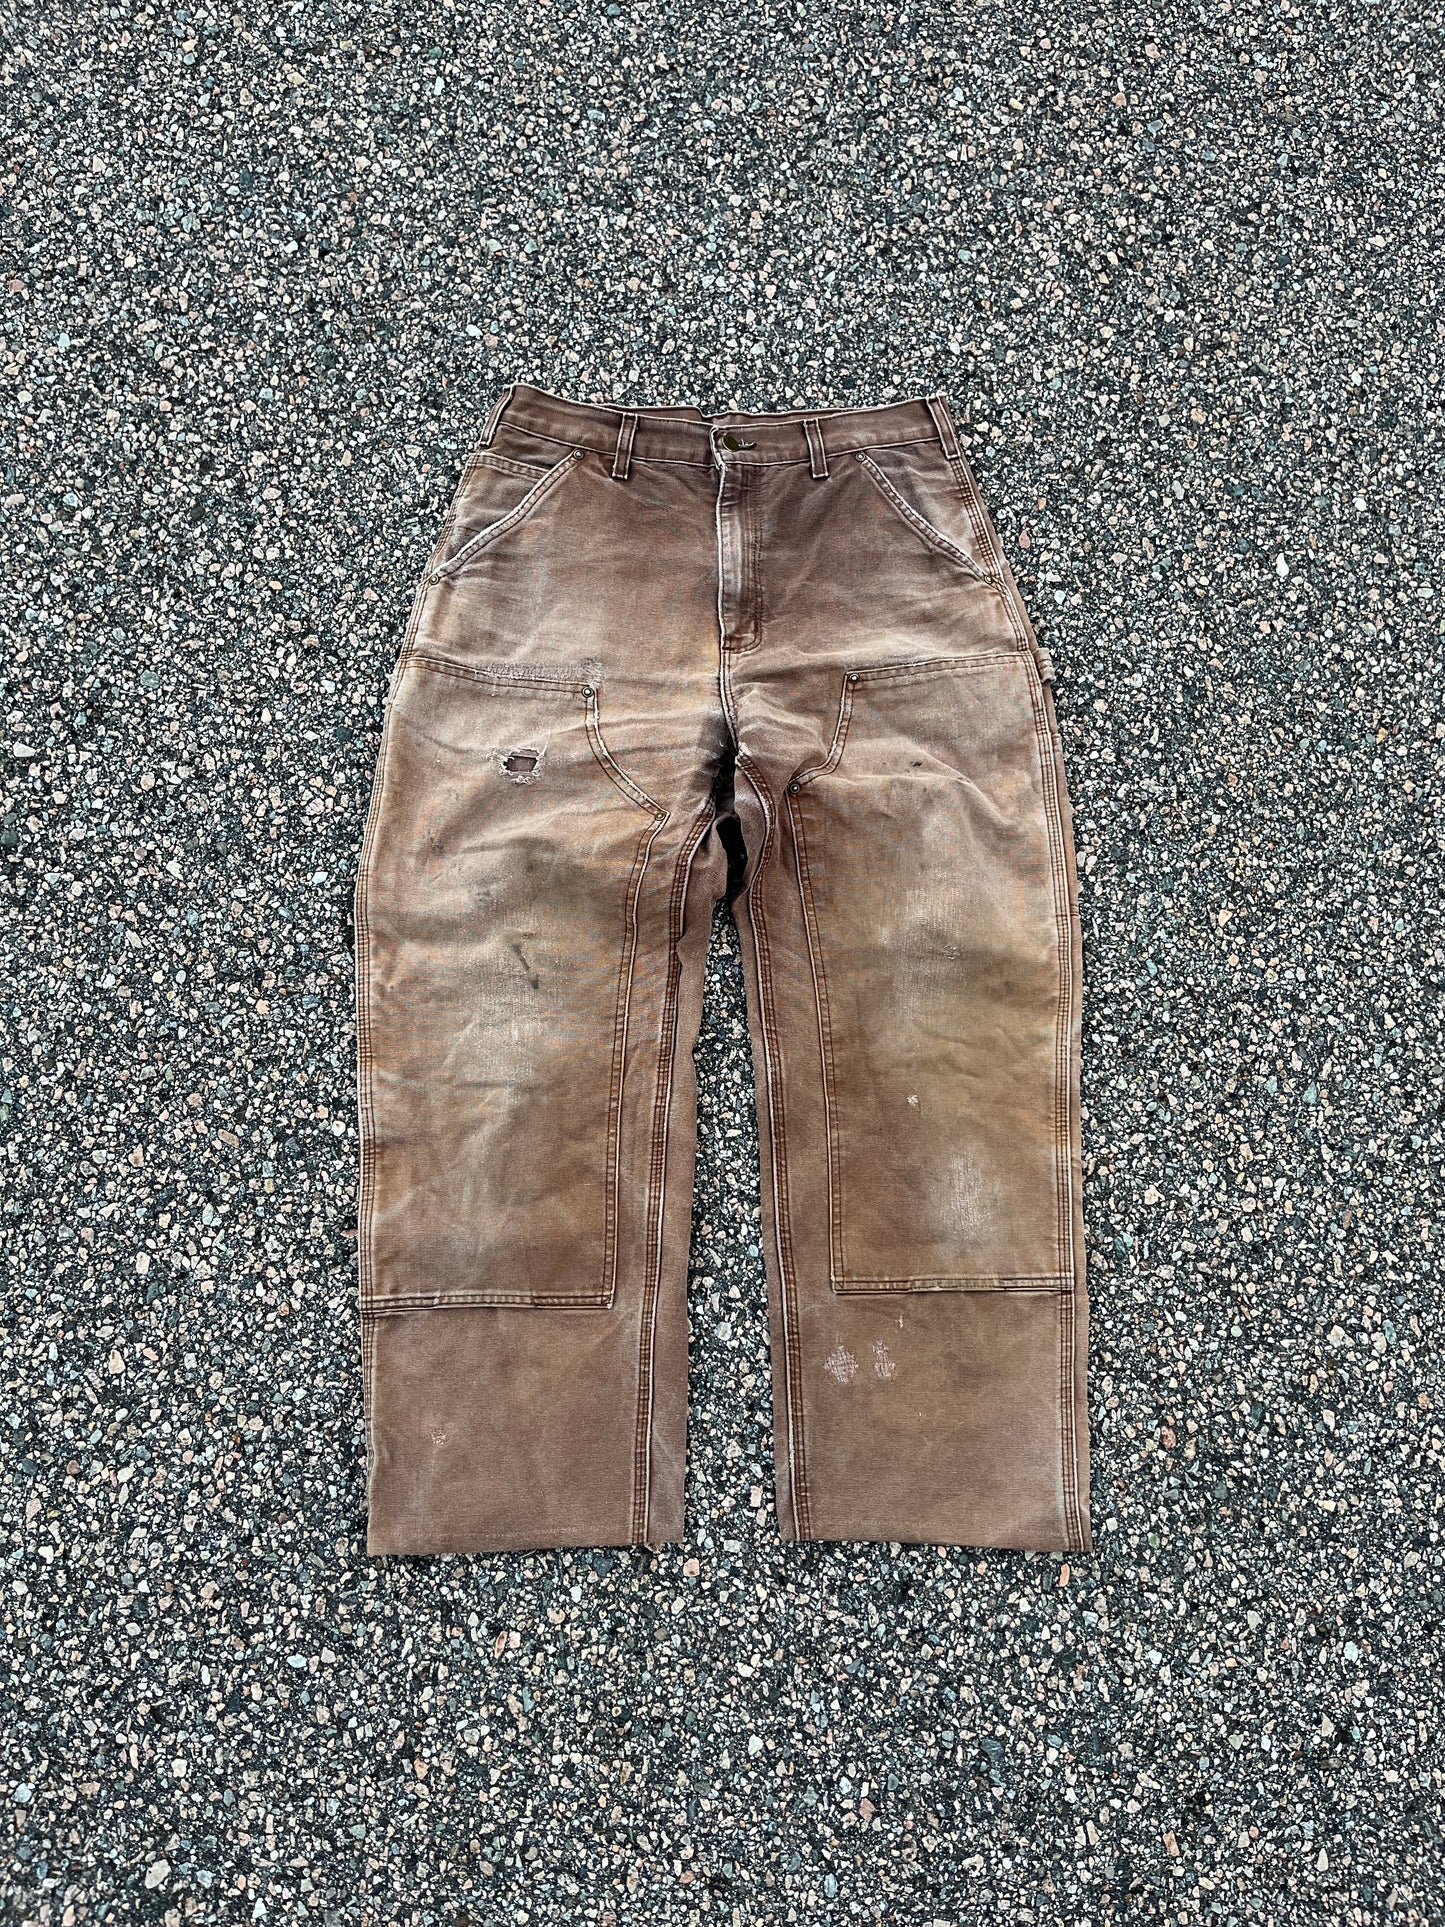 Faded Brown Carhartt Double Knee Pants - 31 x 27